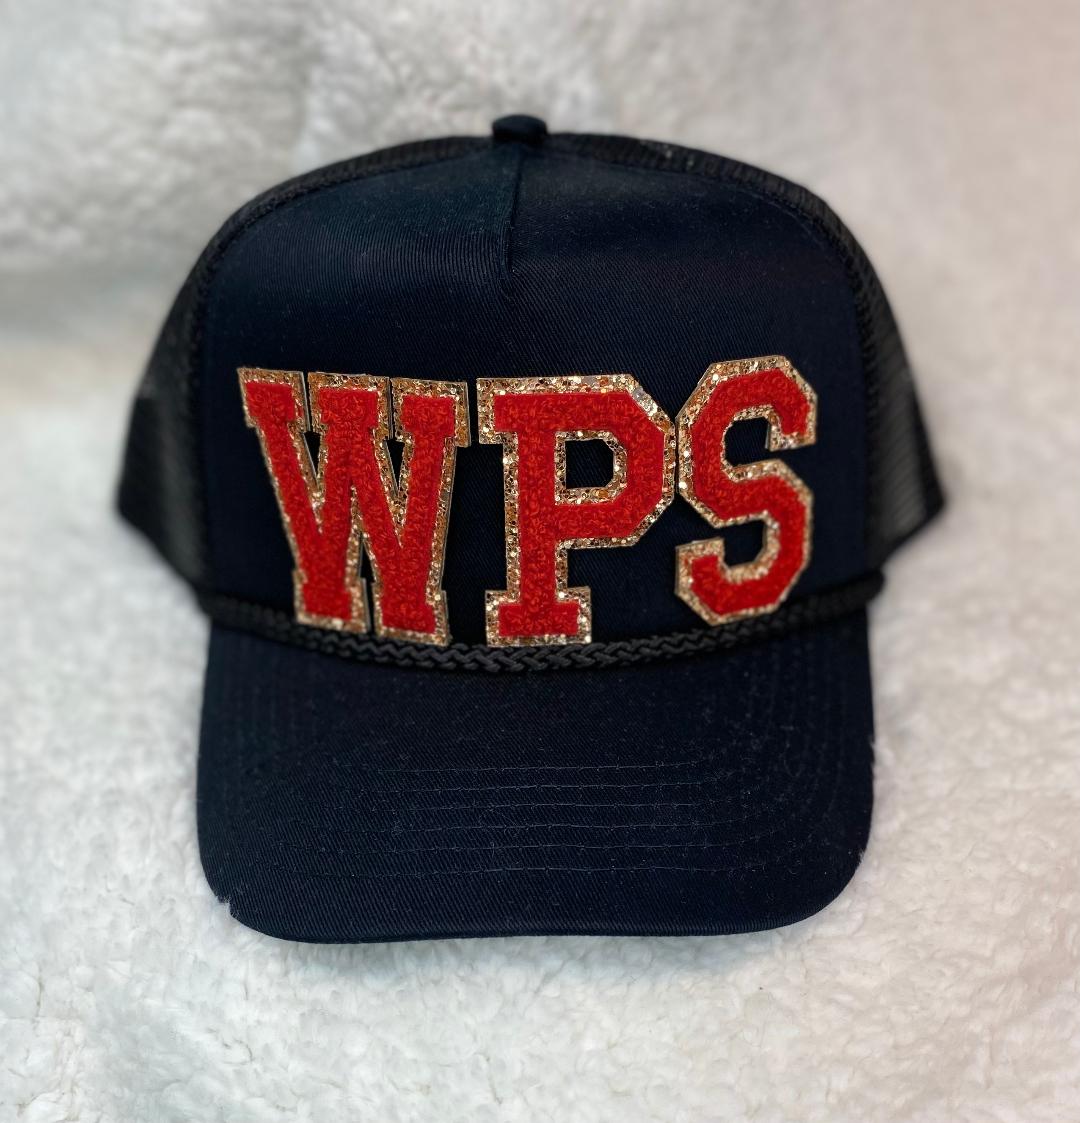 WPS PATCH HAT